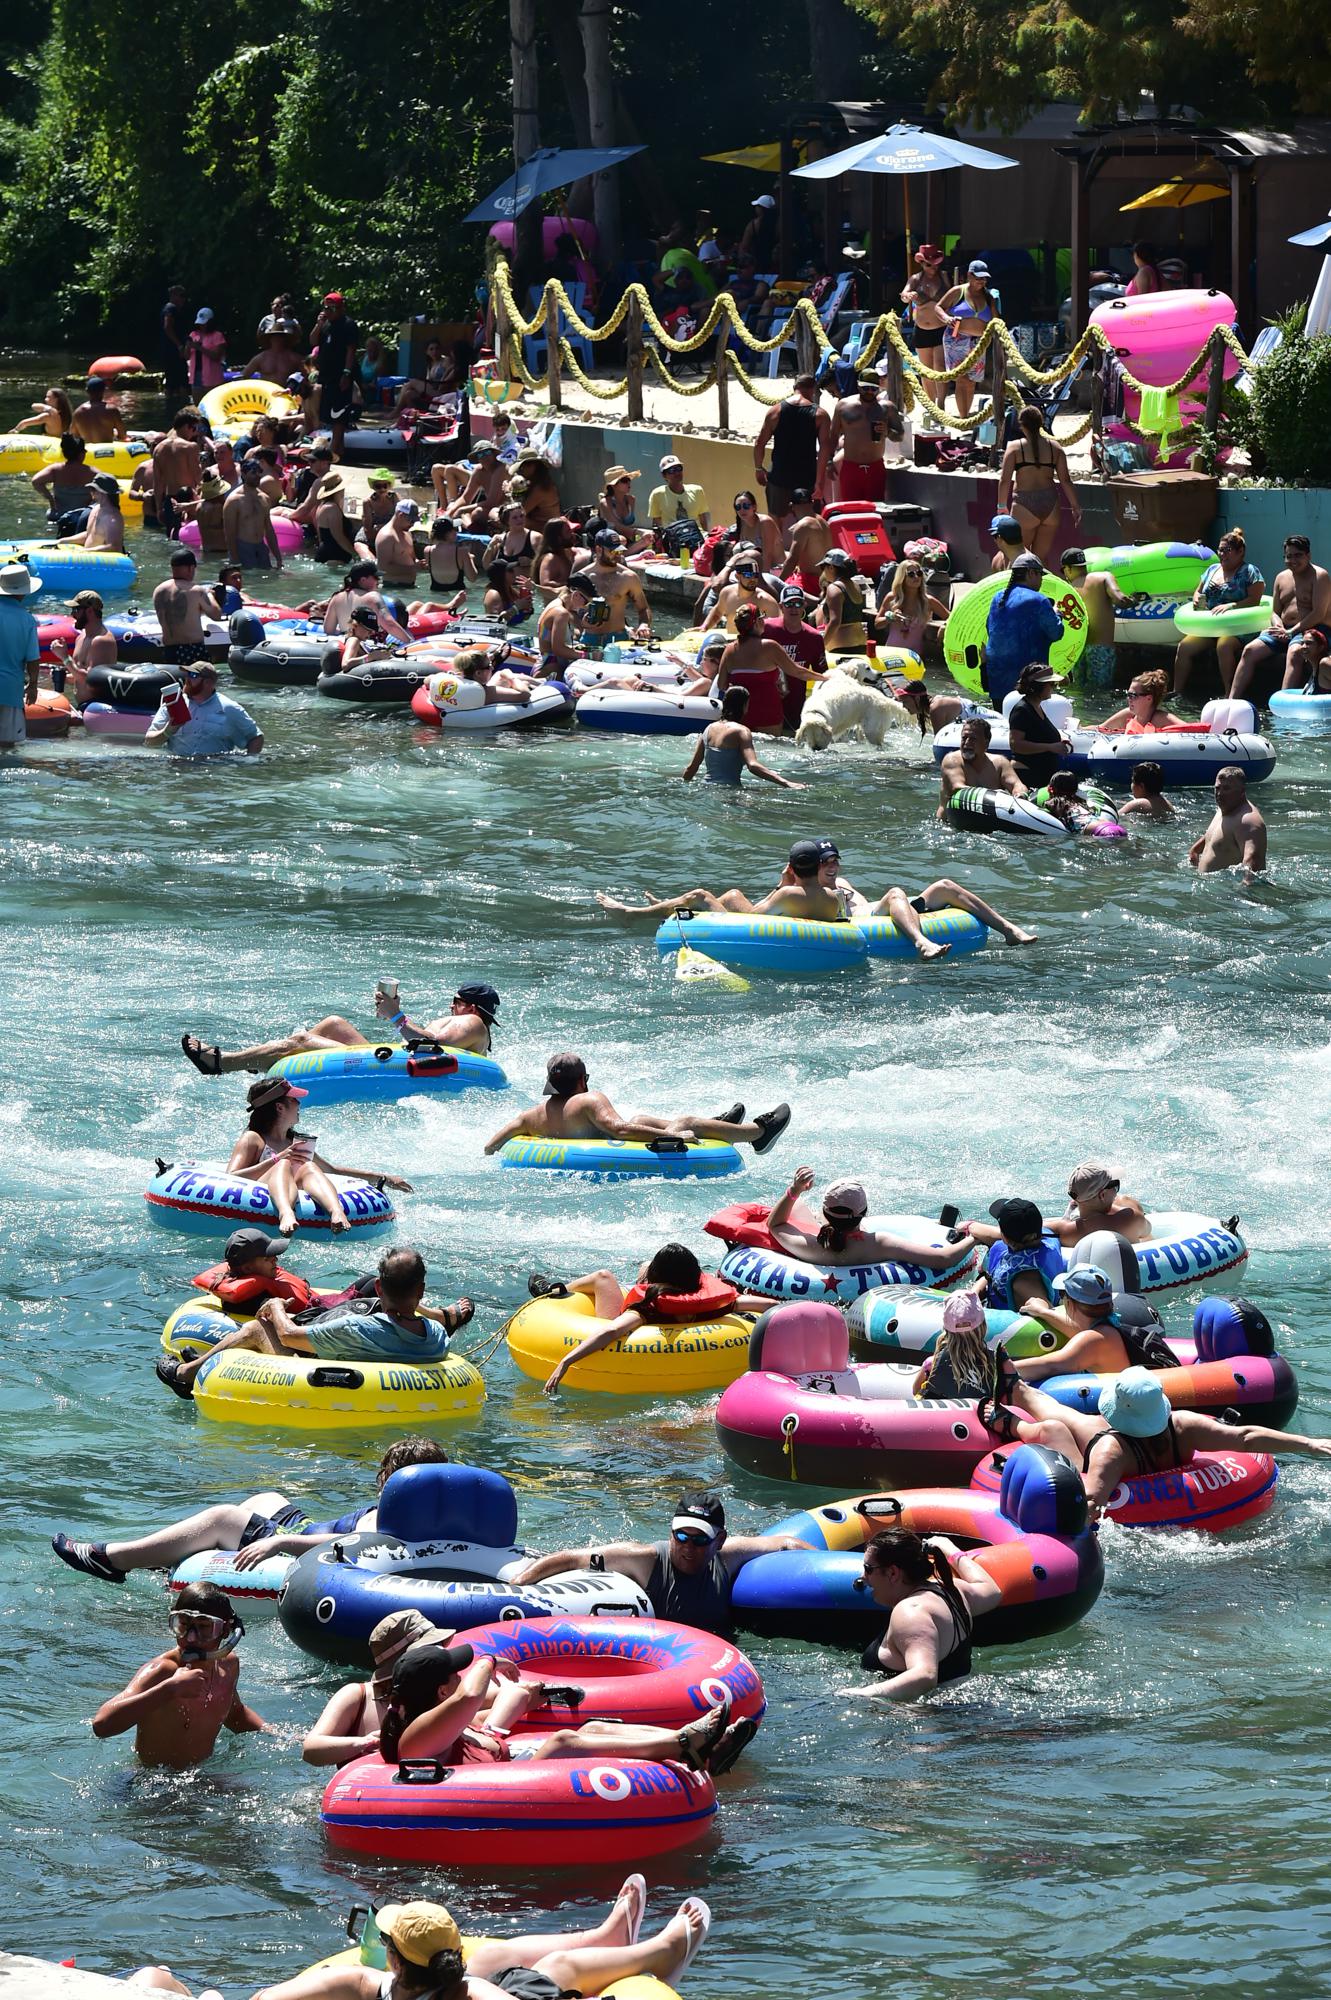 New Braunfels' river tourism: Better summer than last year but not